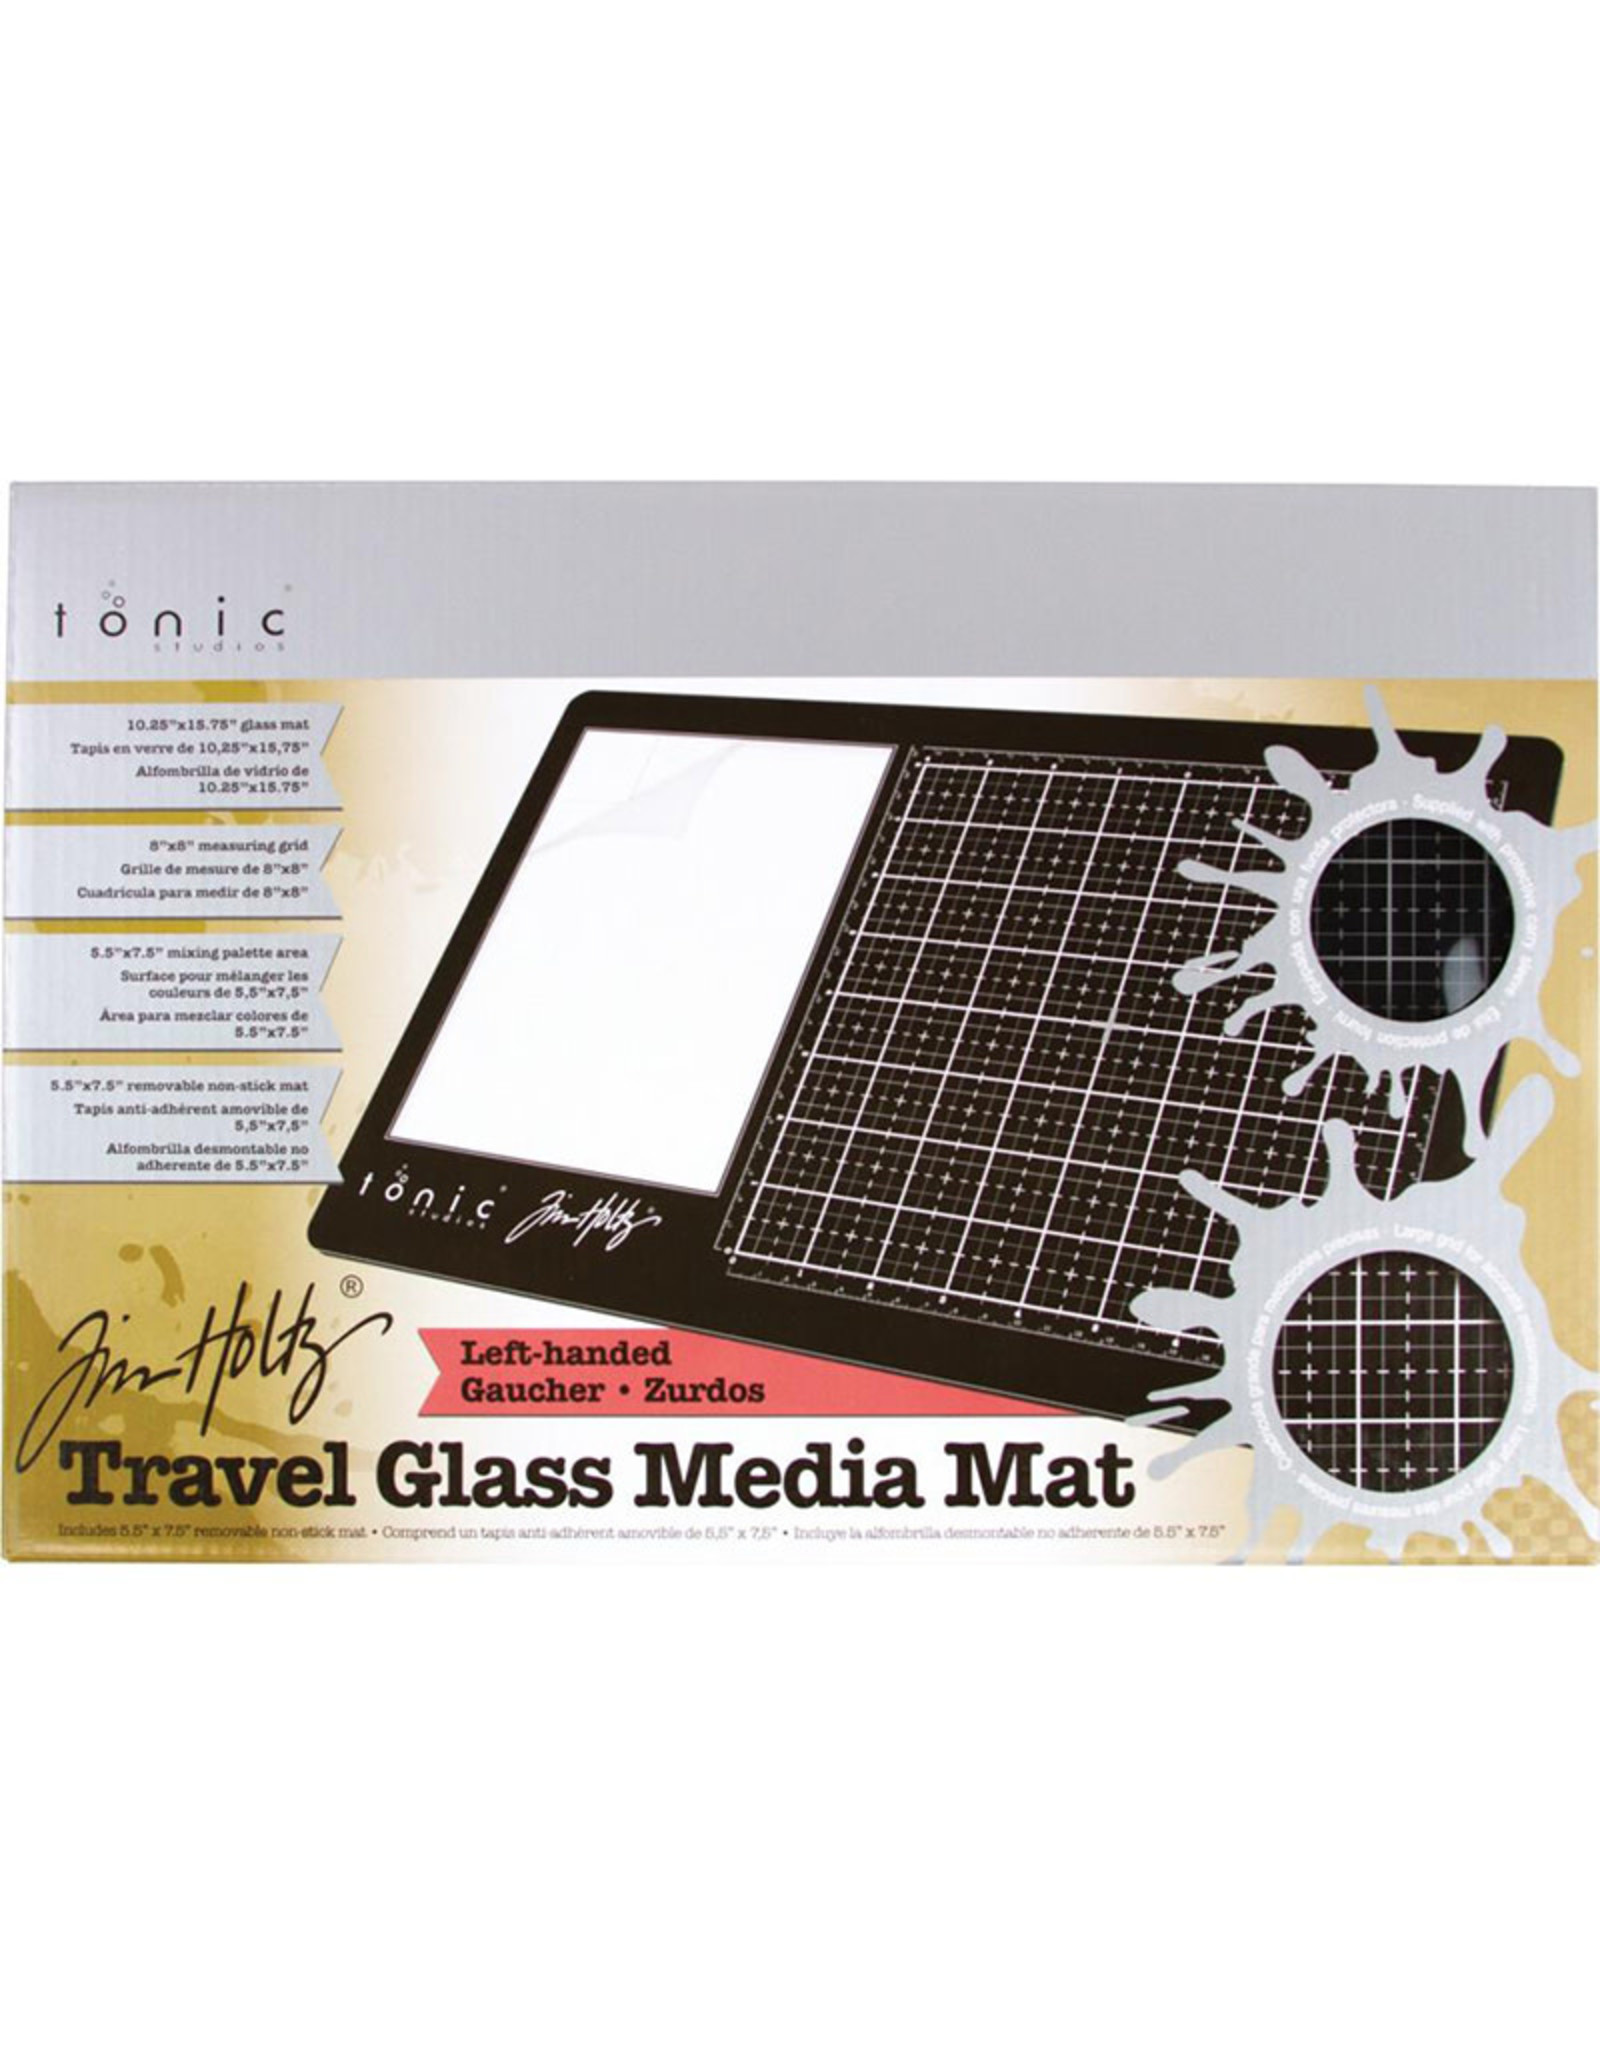 TONIC TONIC STUDIOS TIM HOLTZ GLASS MEDIA MAT TRAVEL LEFT HANDED  10.25''x15.75''